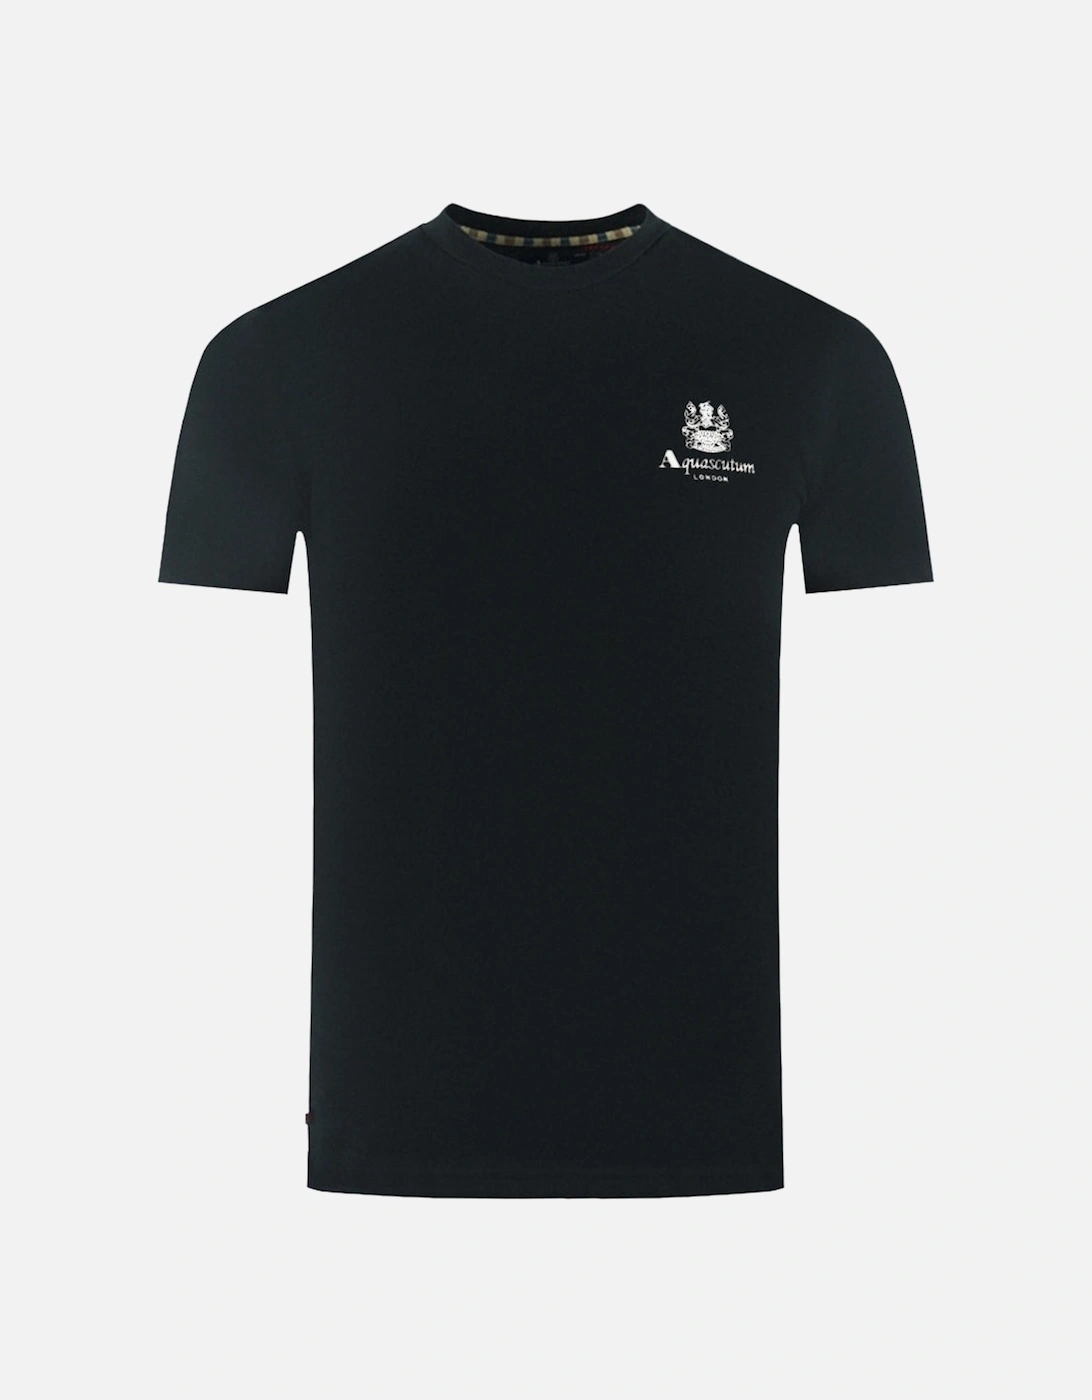 London Aldis Brand Logo On Chest Black T-Shirt, 3 of 2